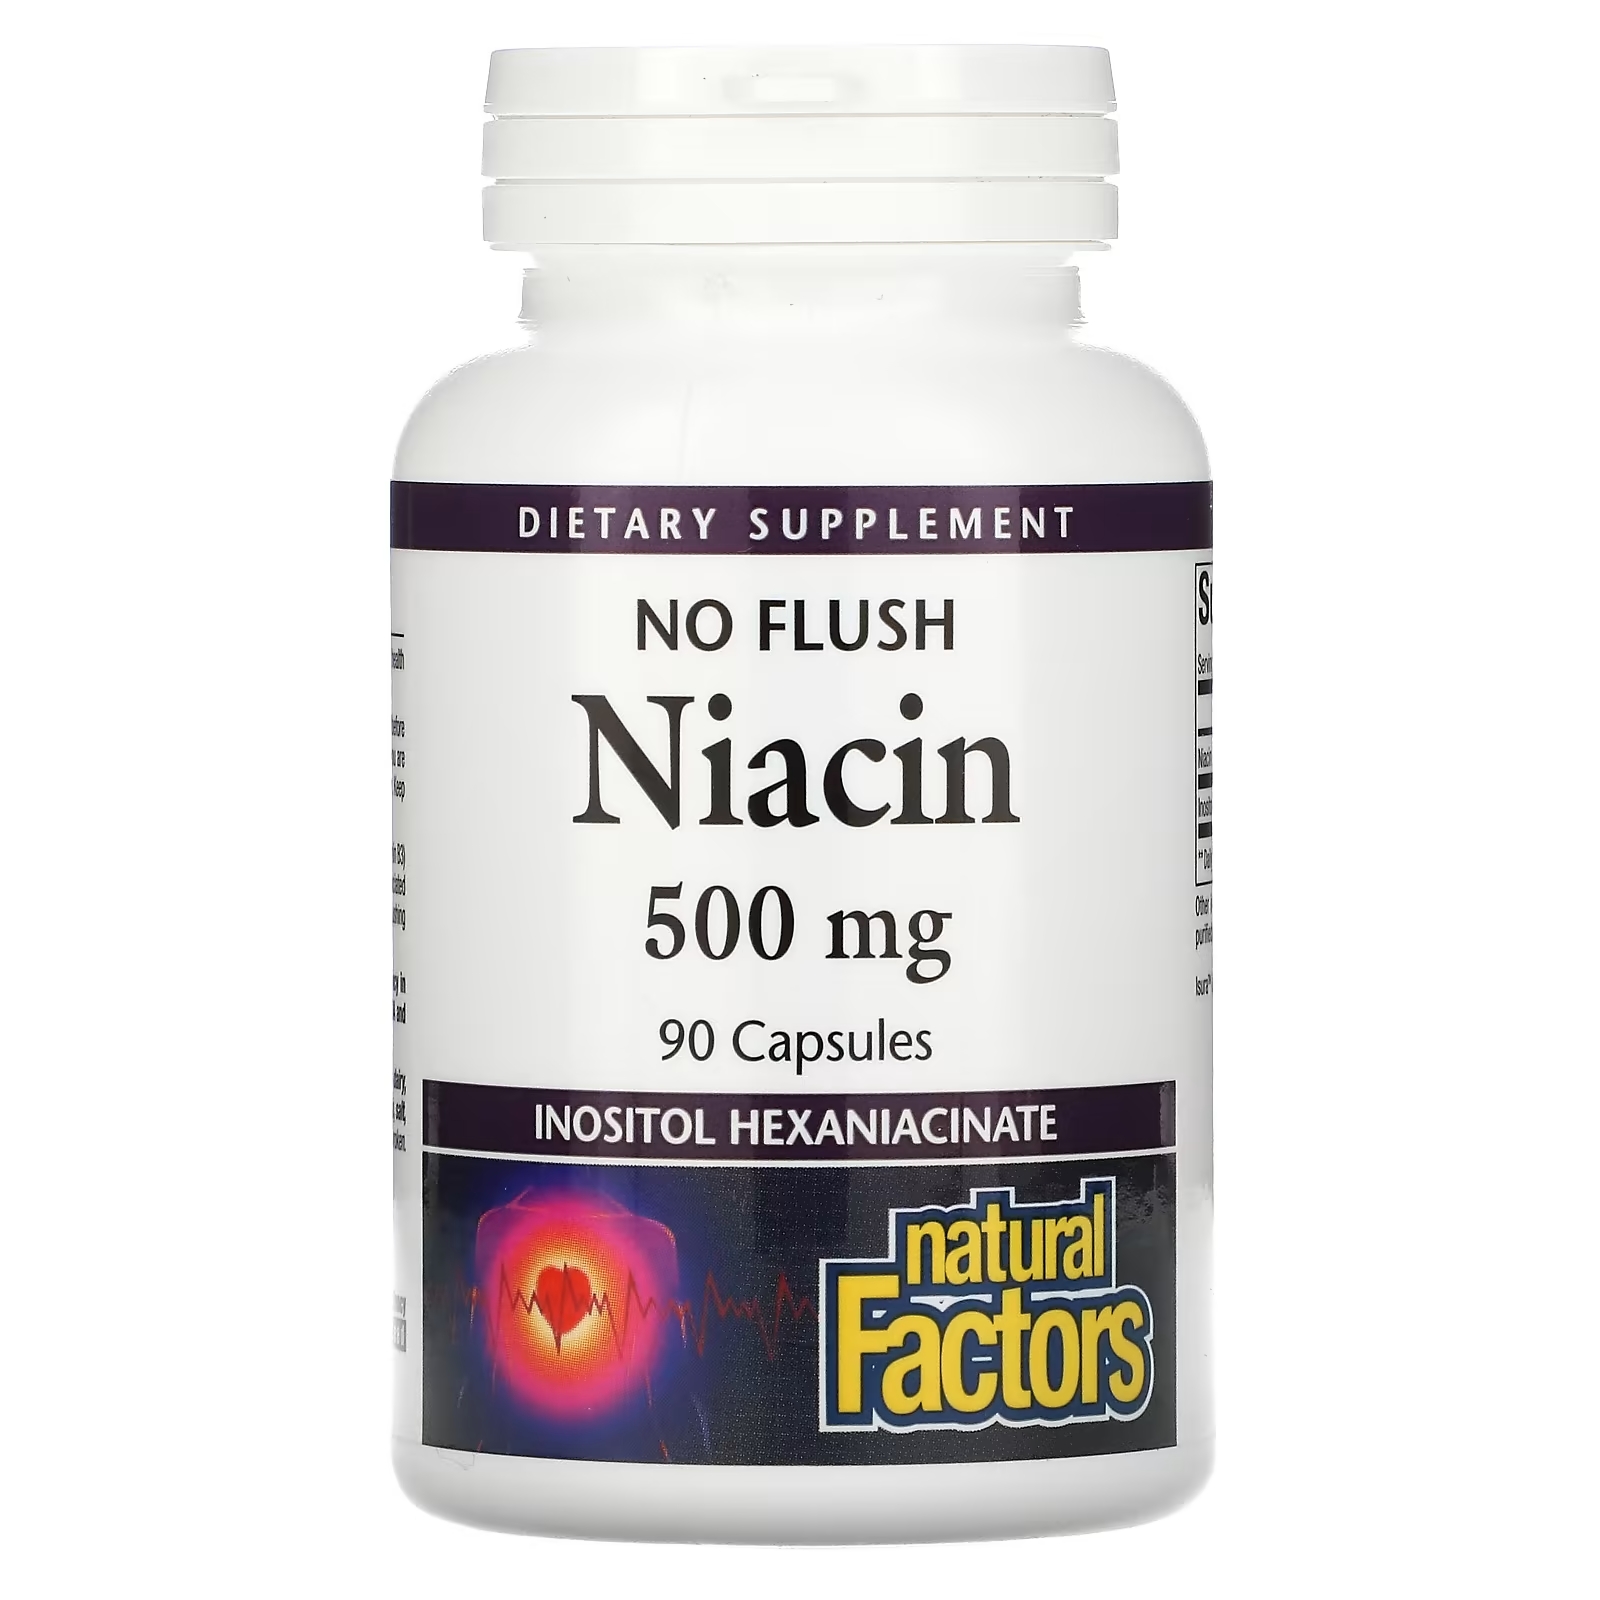 Natural Factors ниацин без приливов 500 мг, 90 капсул life extension ниацин не вызывает приливов крови 640 мг 100 капсул